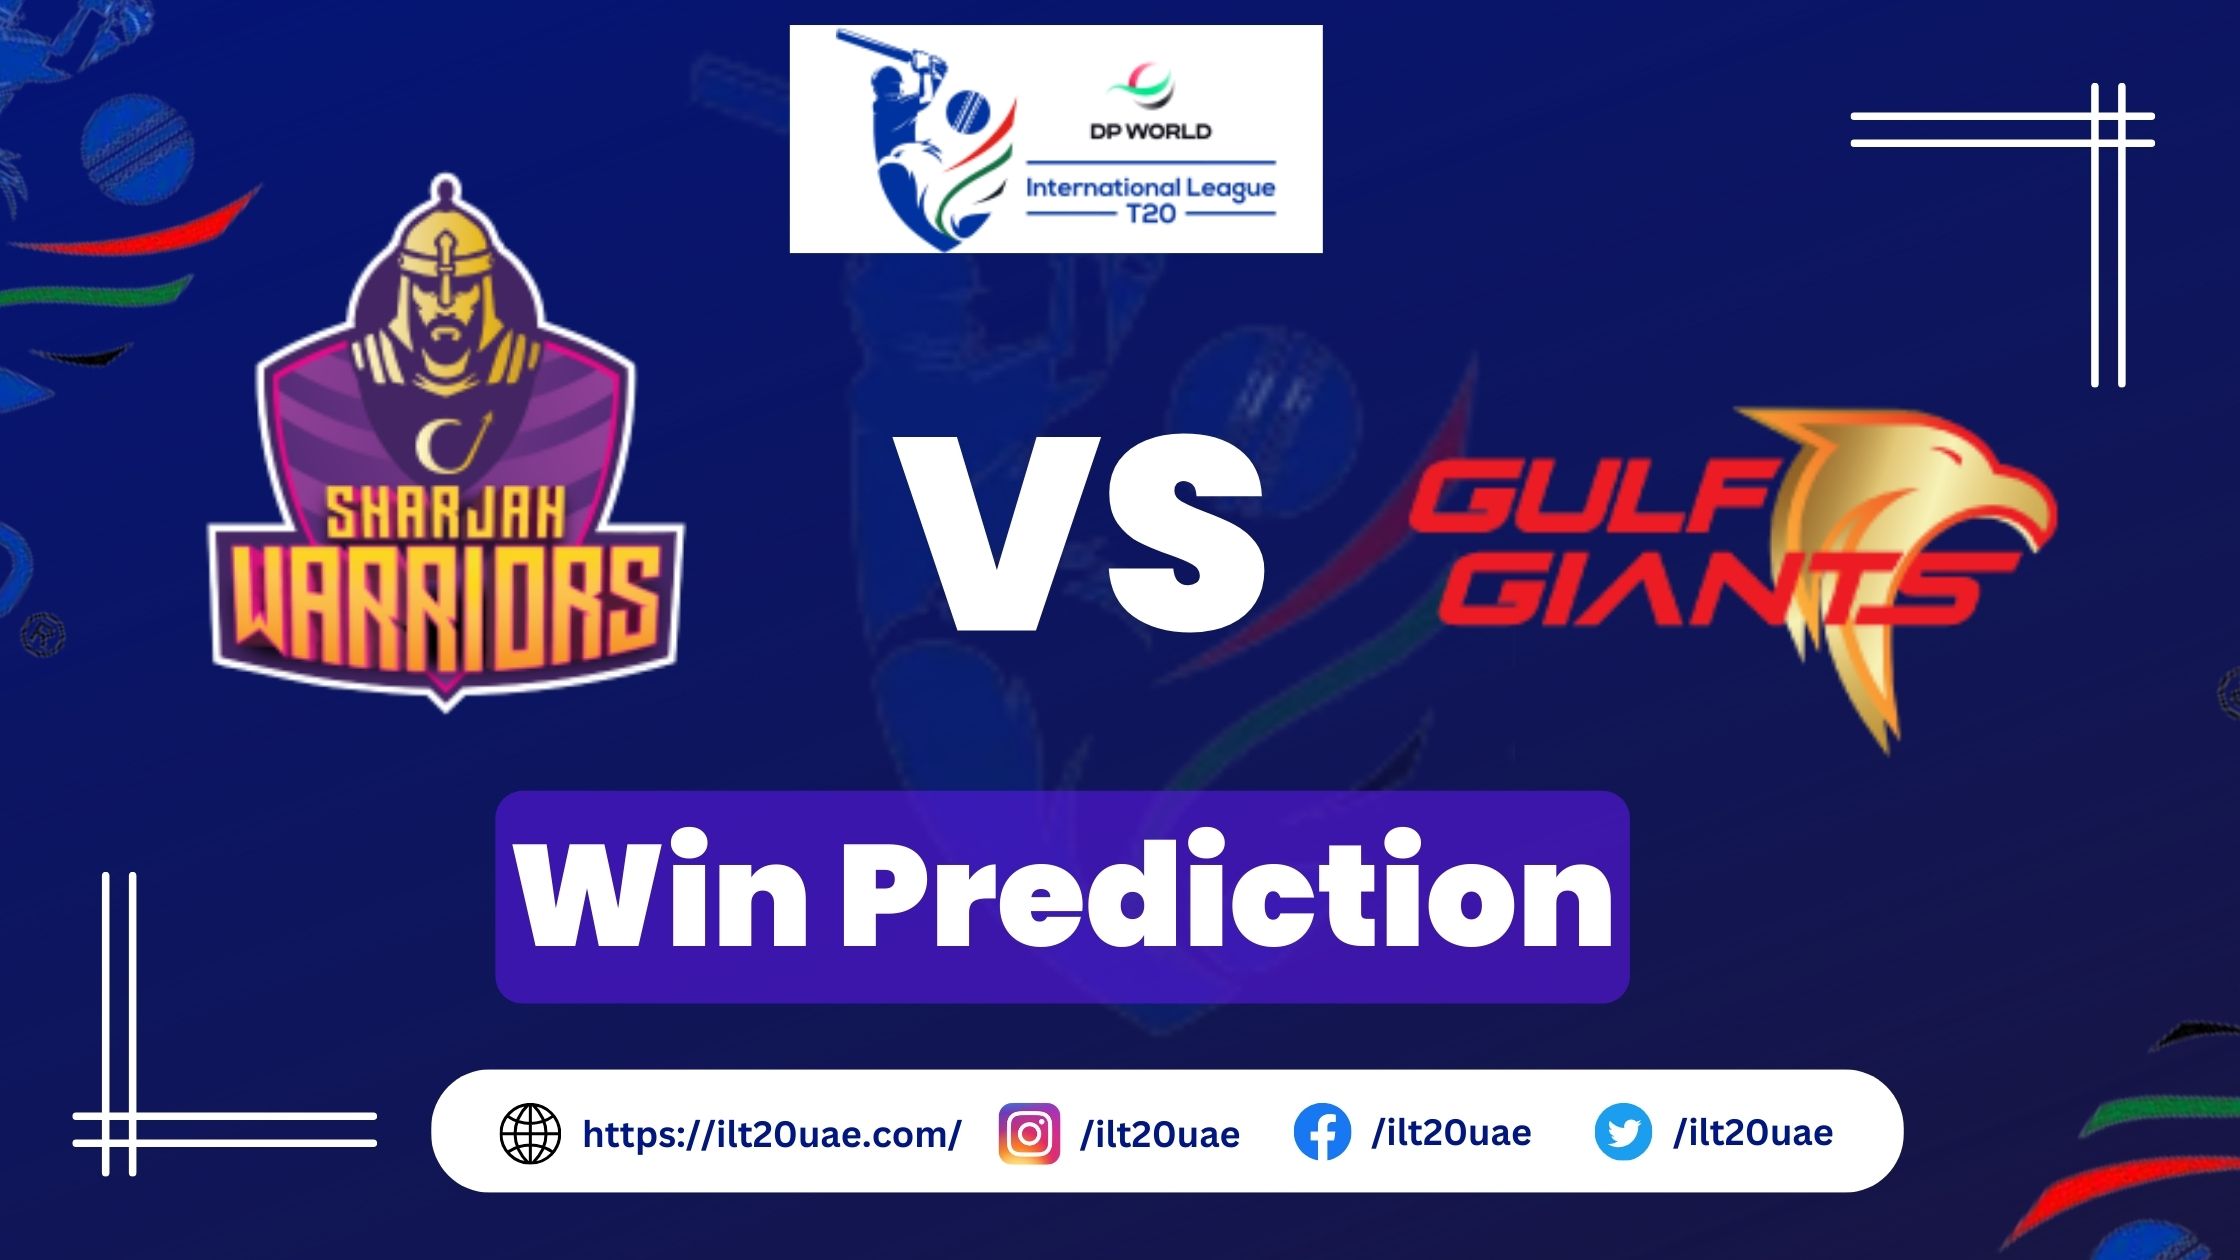 Gulf Giants VS Sharjah Warriors Win Prediction